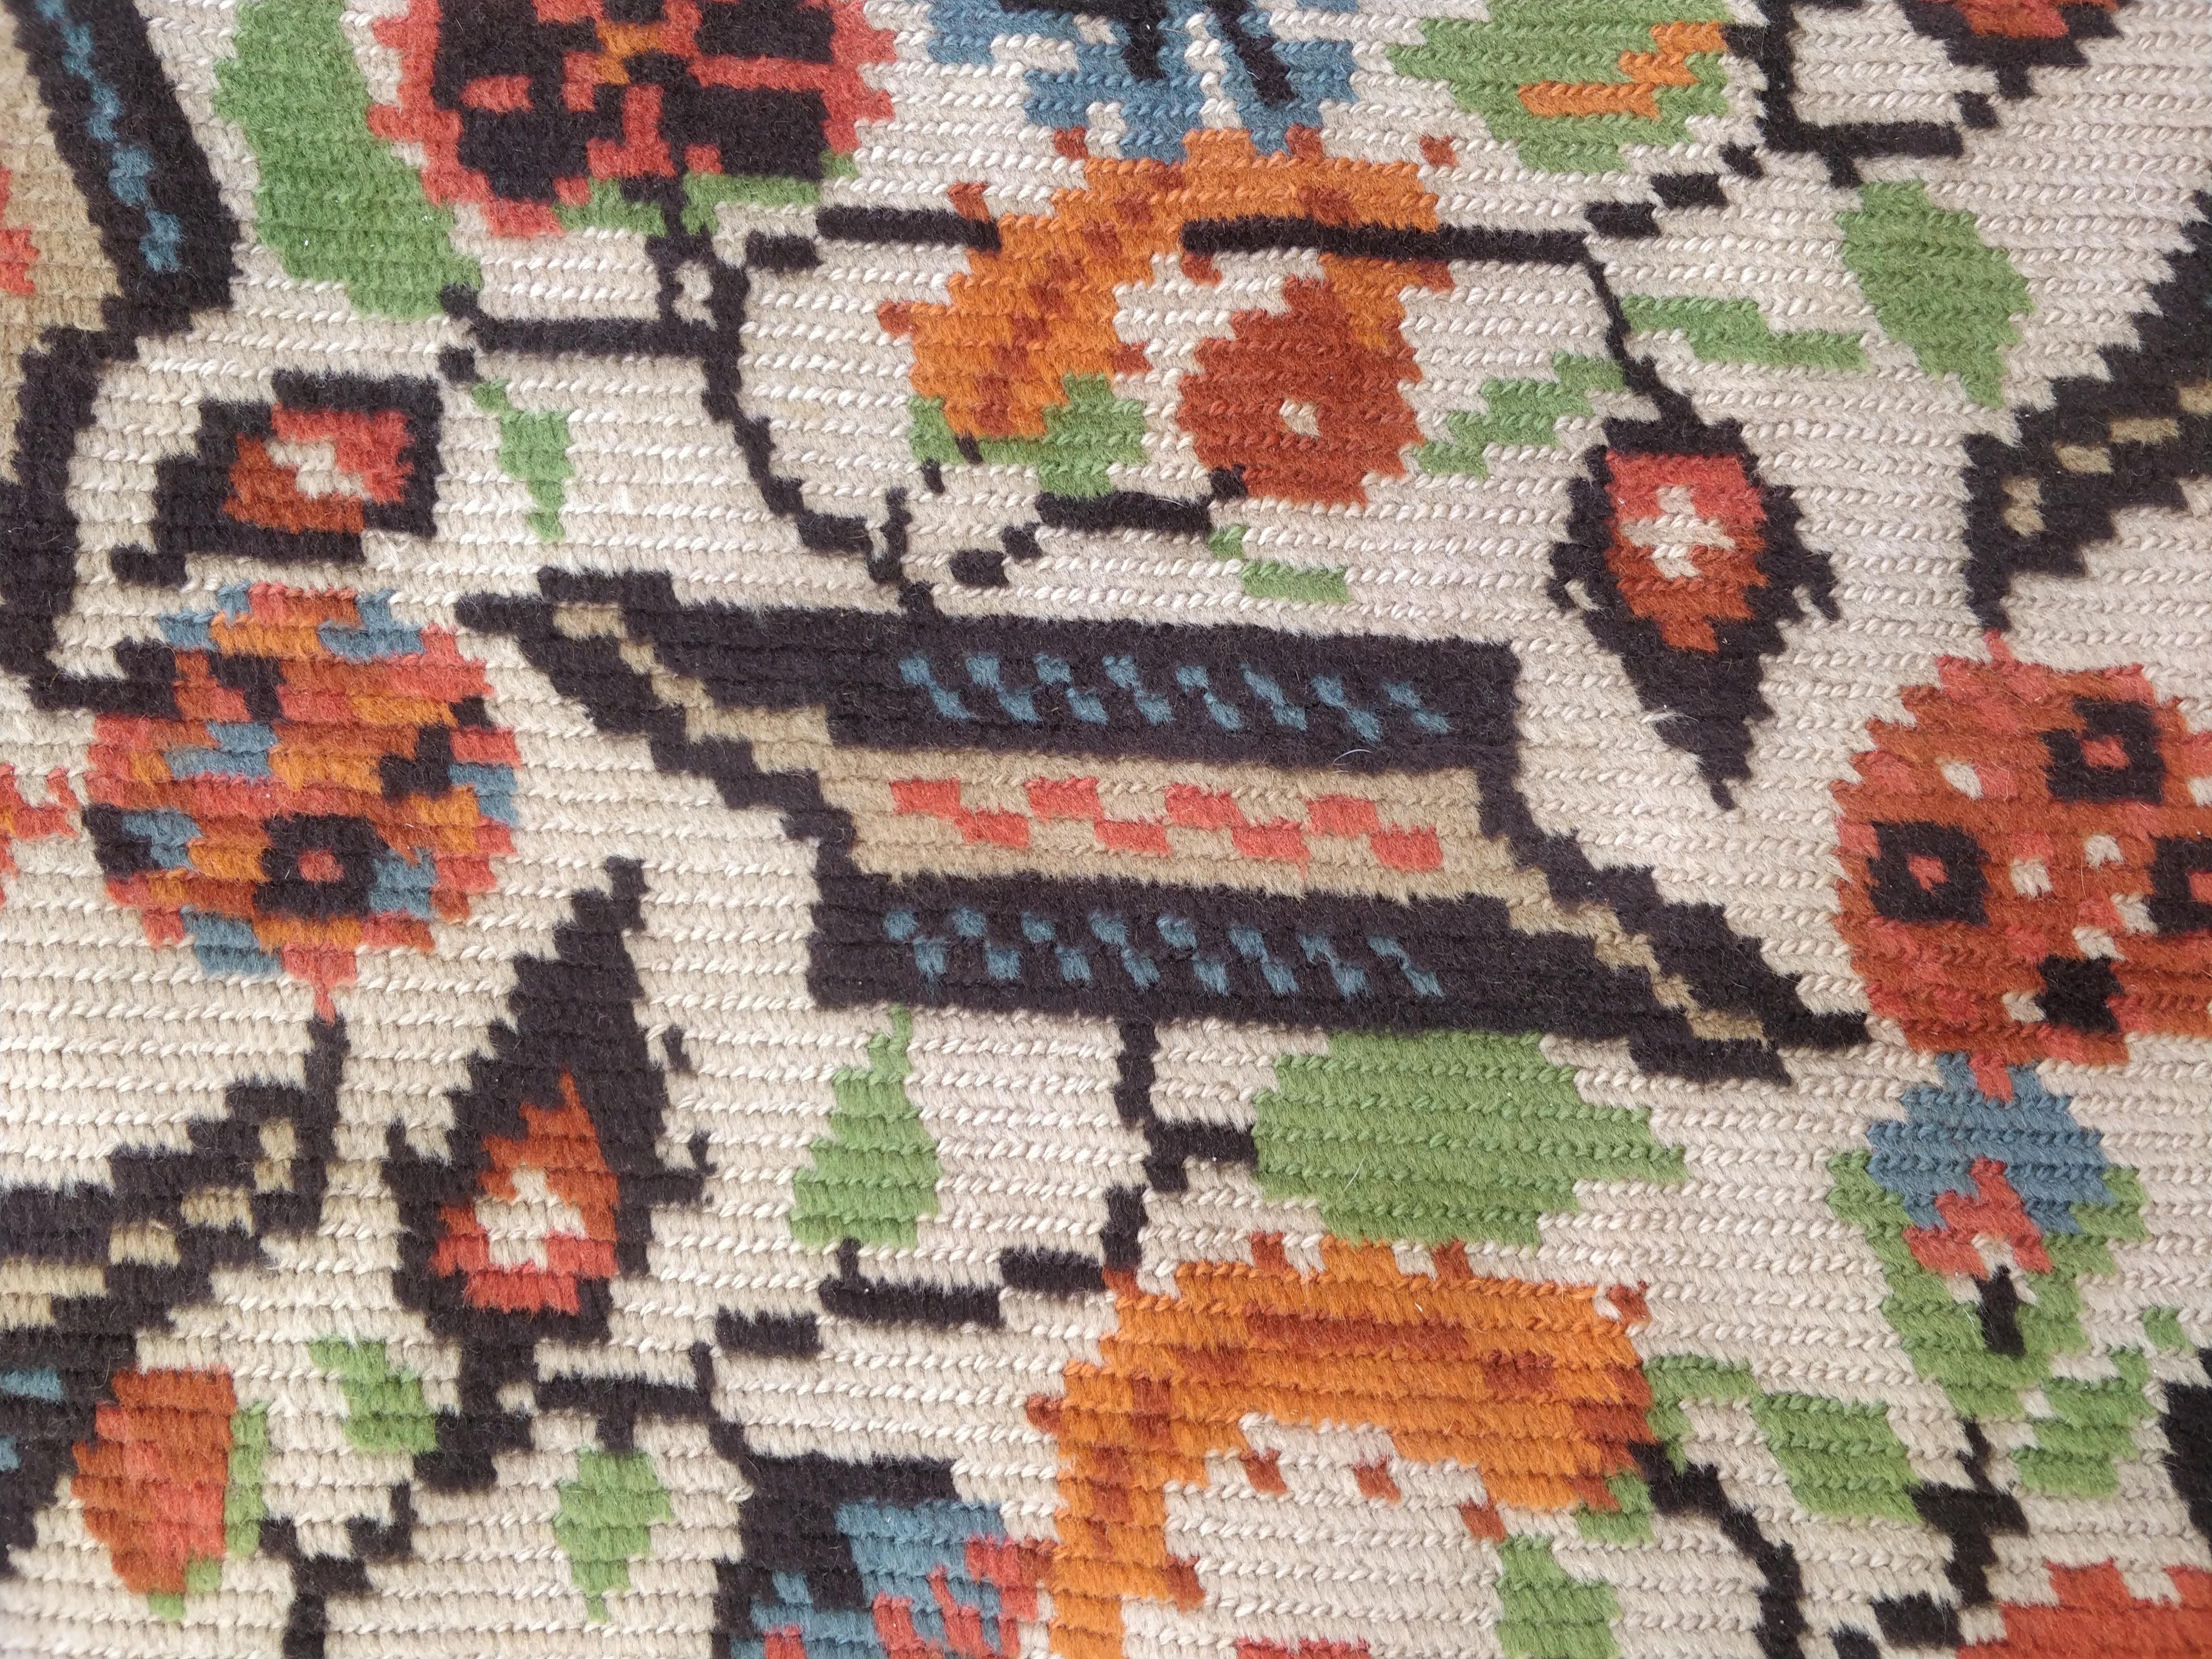 European Anatolian-style carpet with Ushak design featuring birds (Austria) For Sale 8